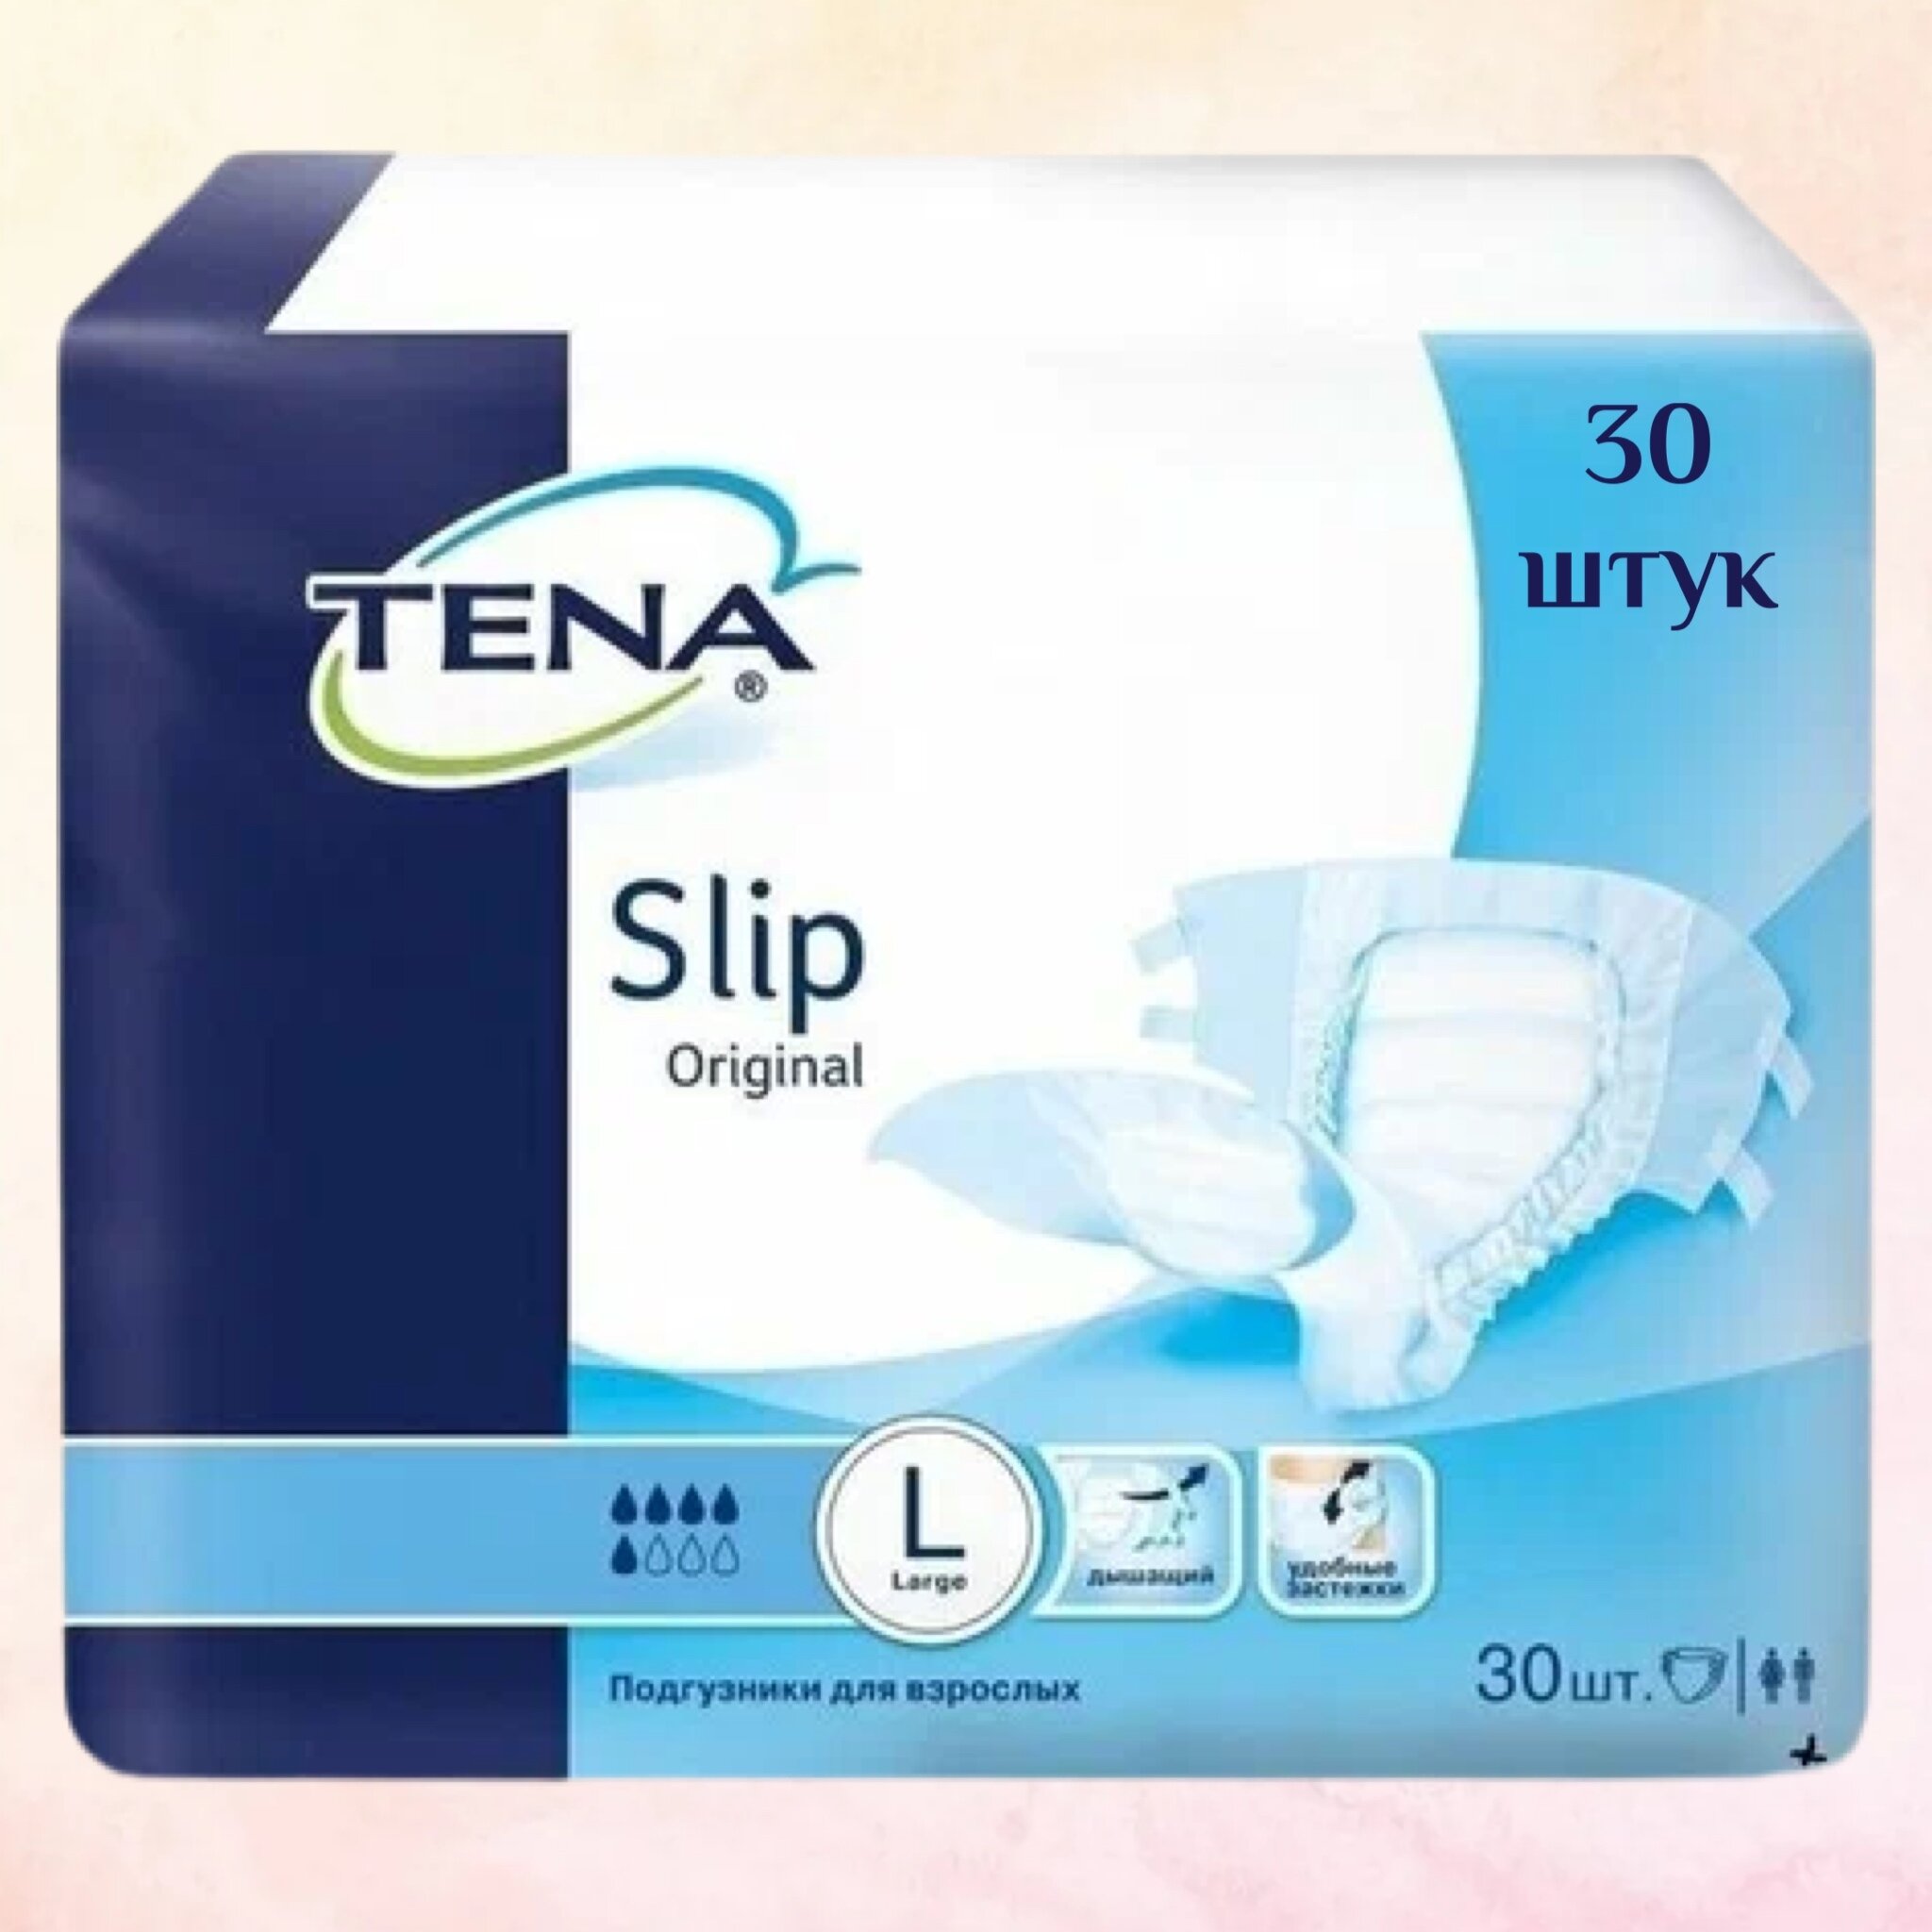 TENA / Tena Slip Original подгузники для взрослых размер L, 30 шт.